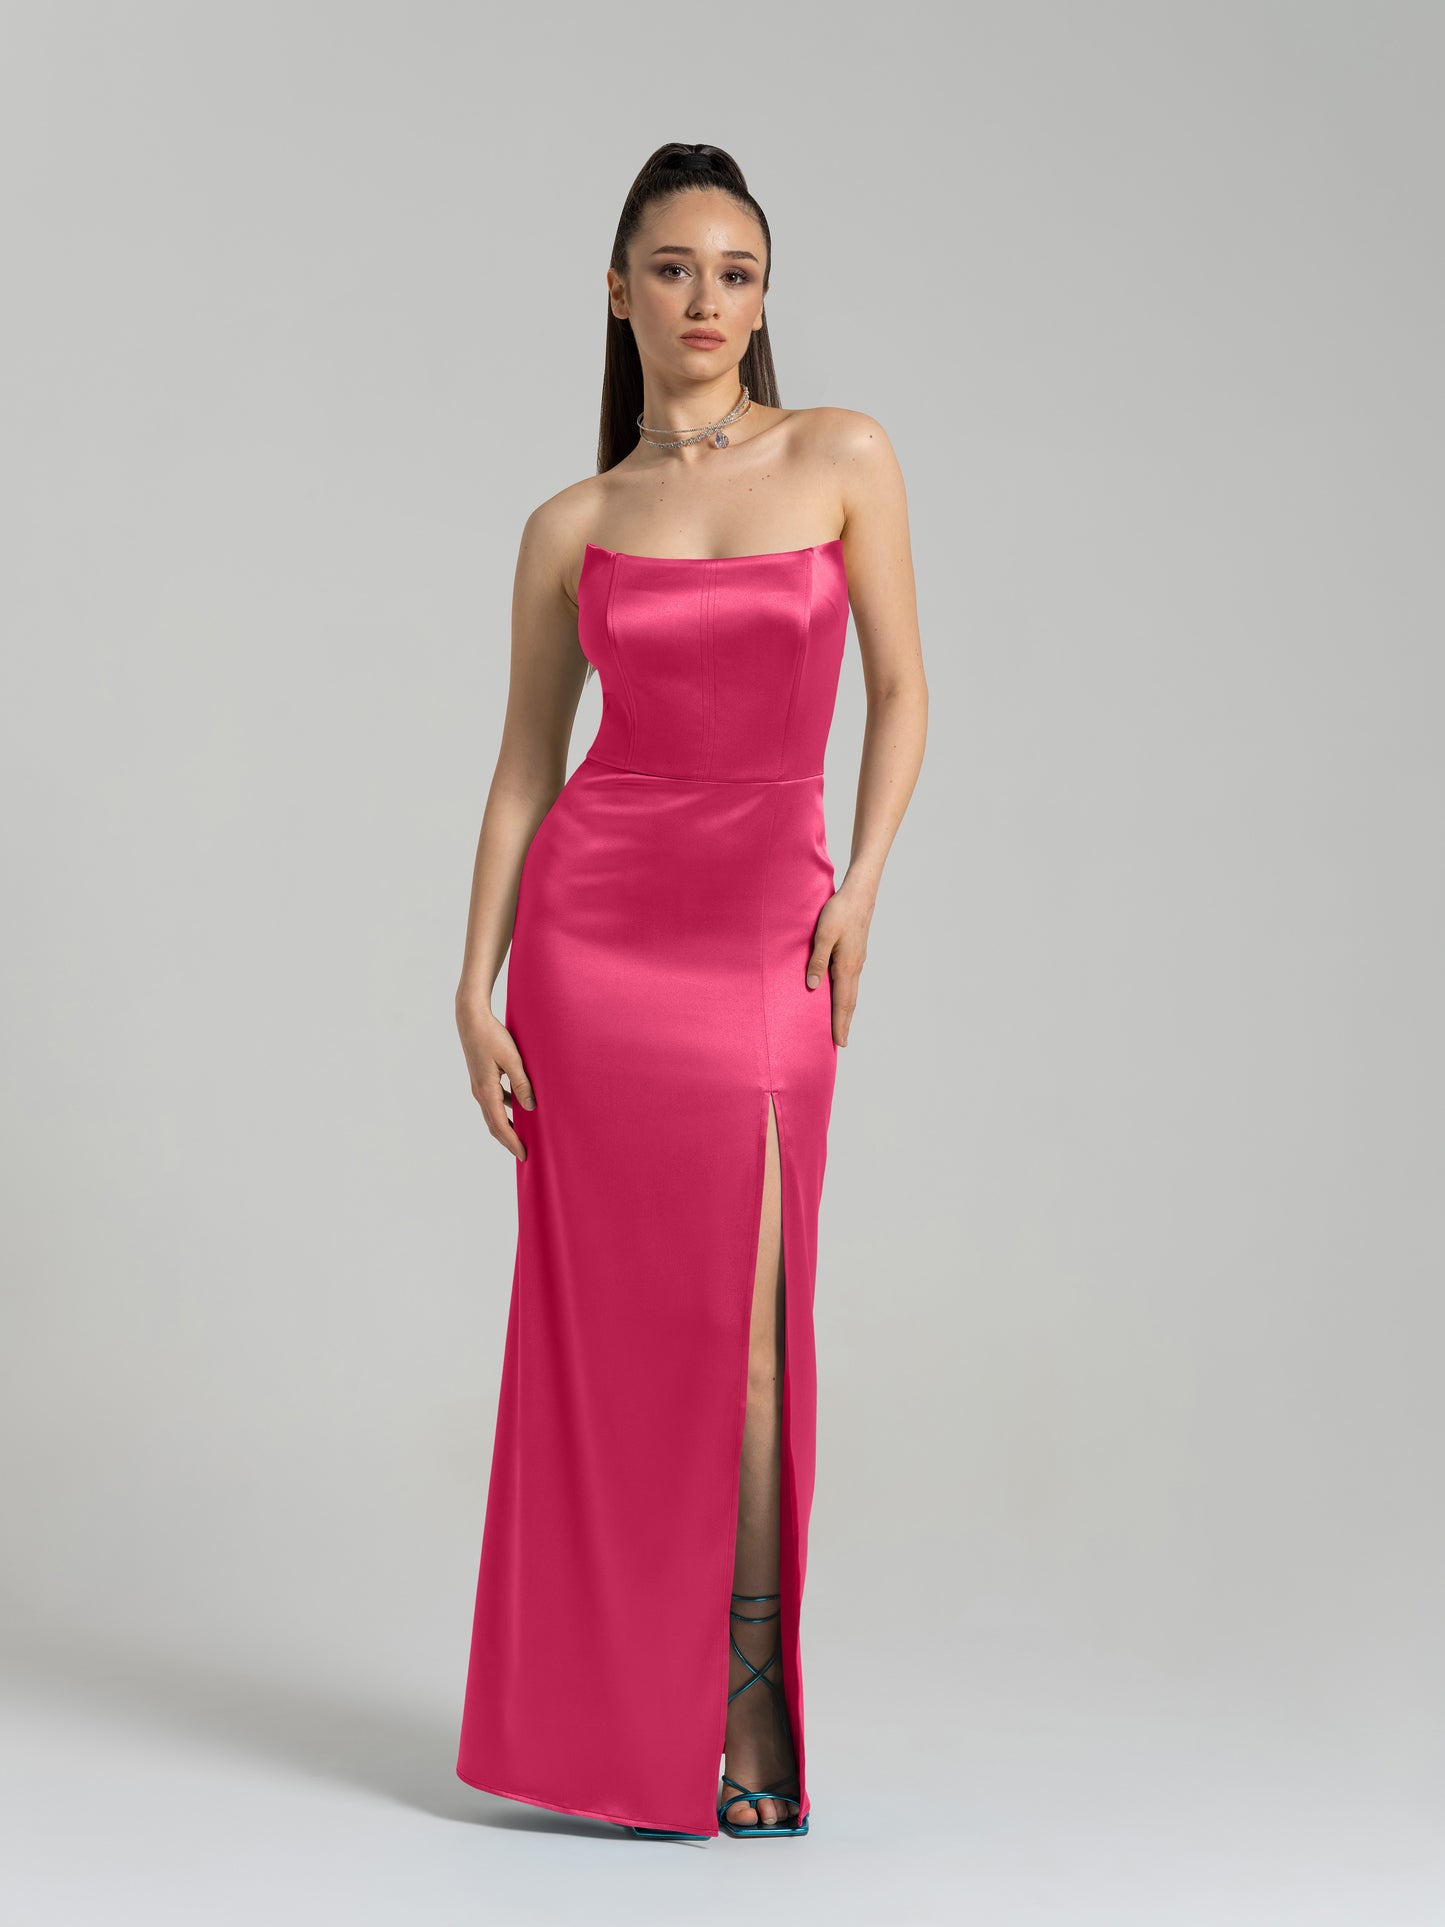 Queen of Hearts Satin Maxi Dress - Hot Pink